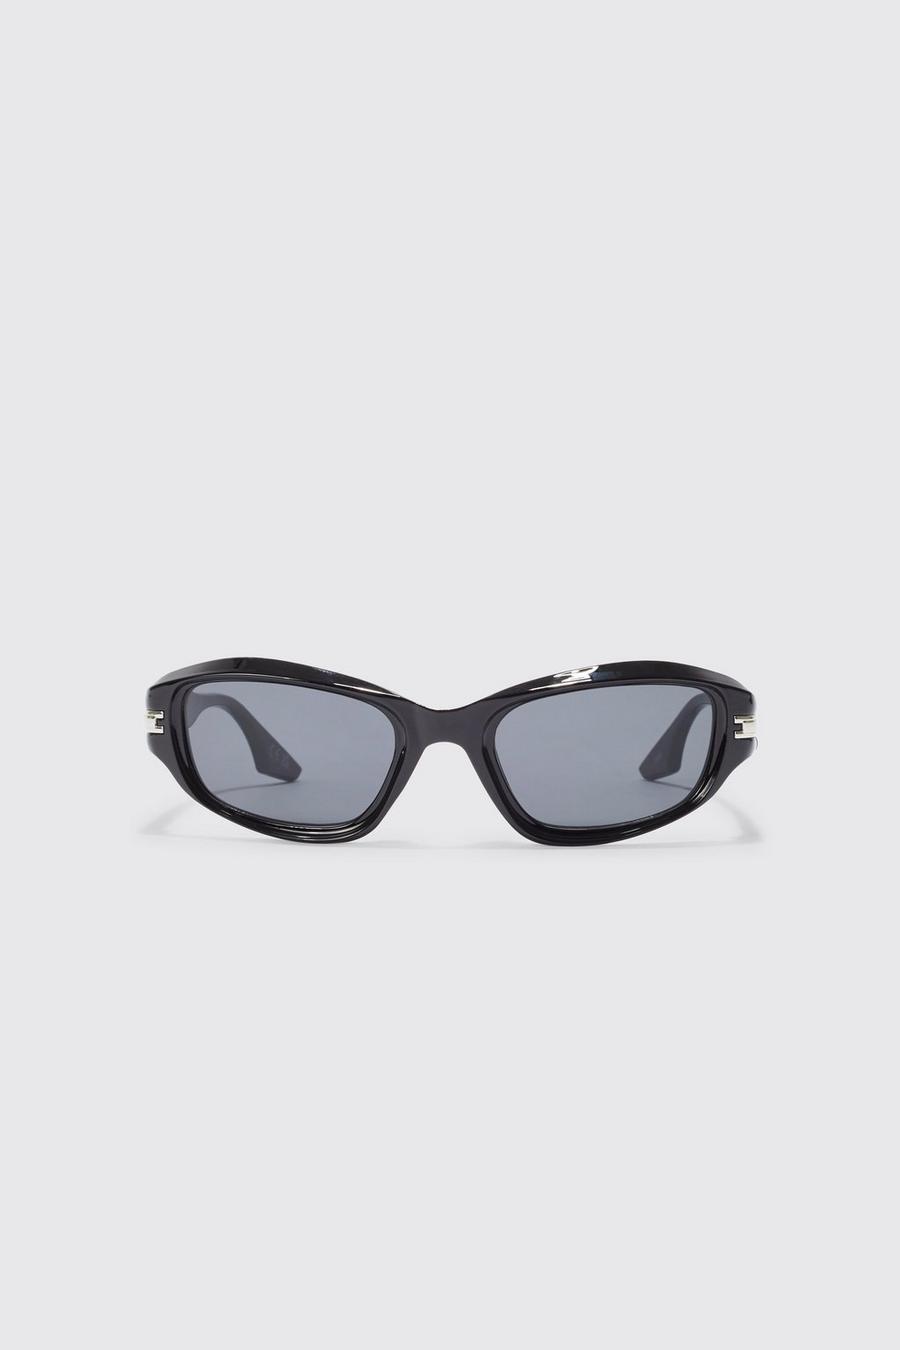 Black Angled Lens Sunglasses